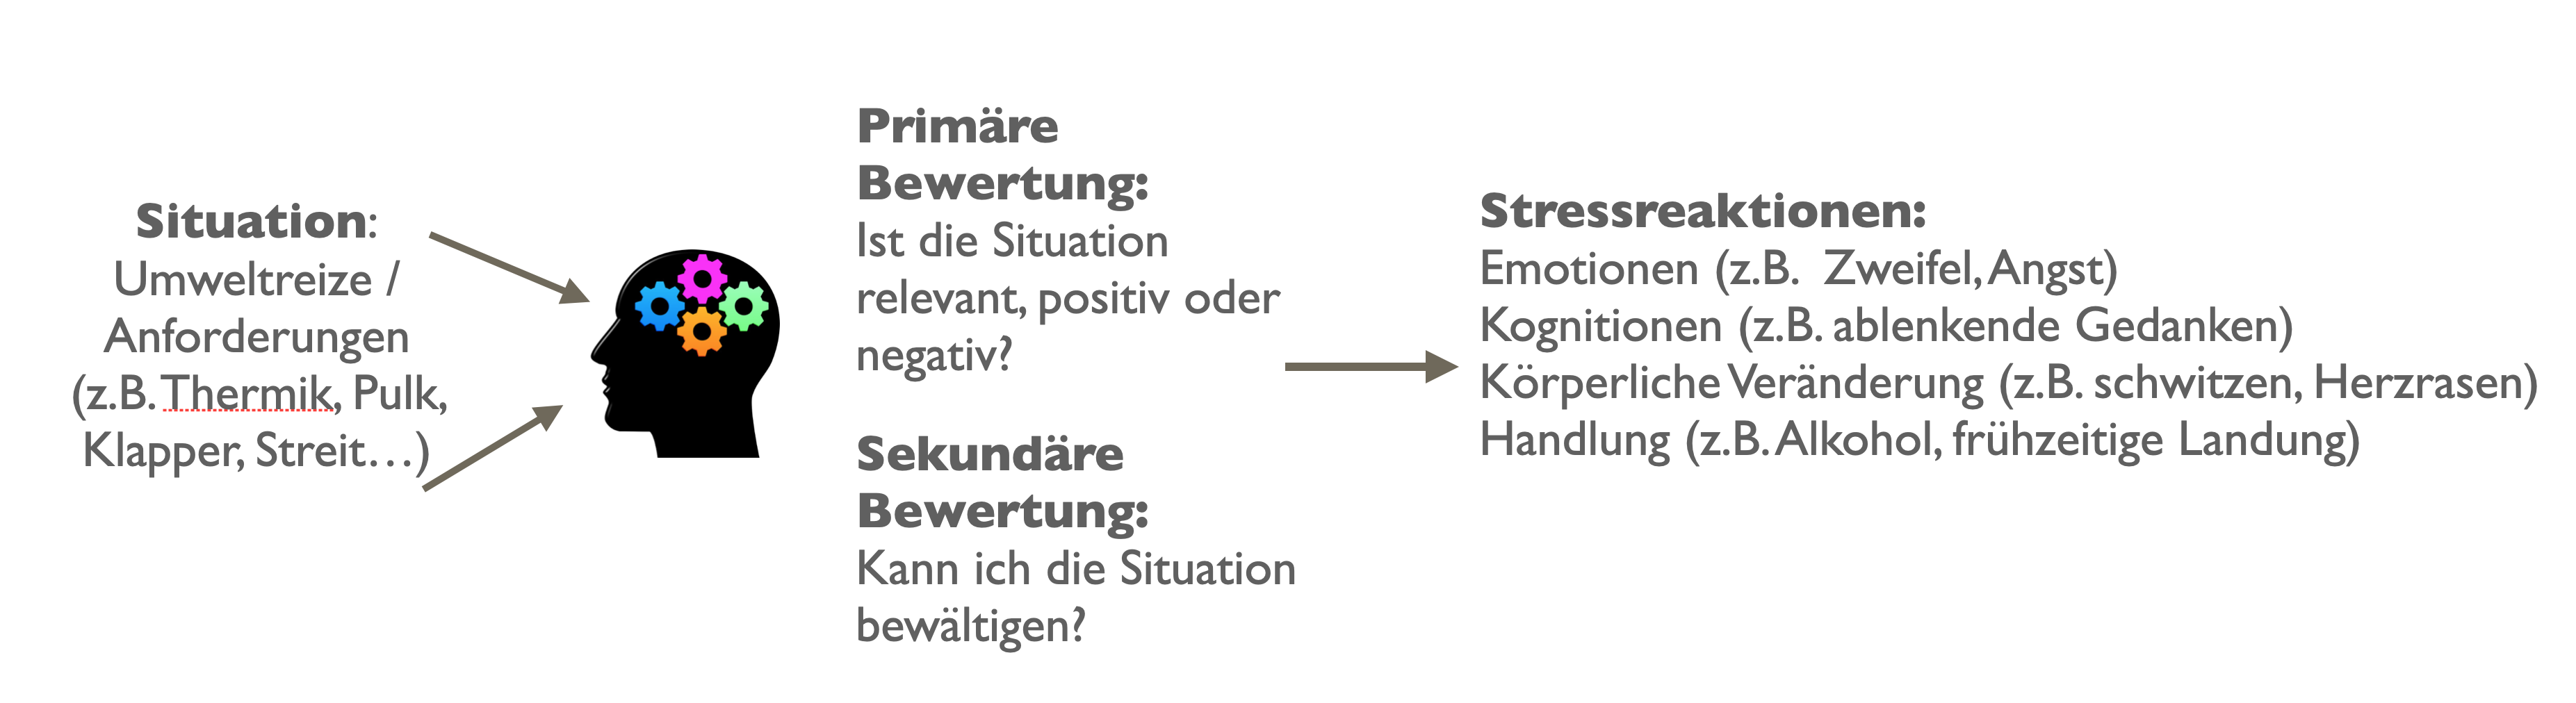 Transaktionale Stressmodell